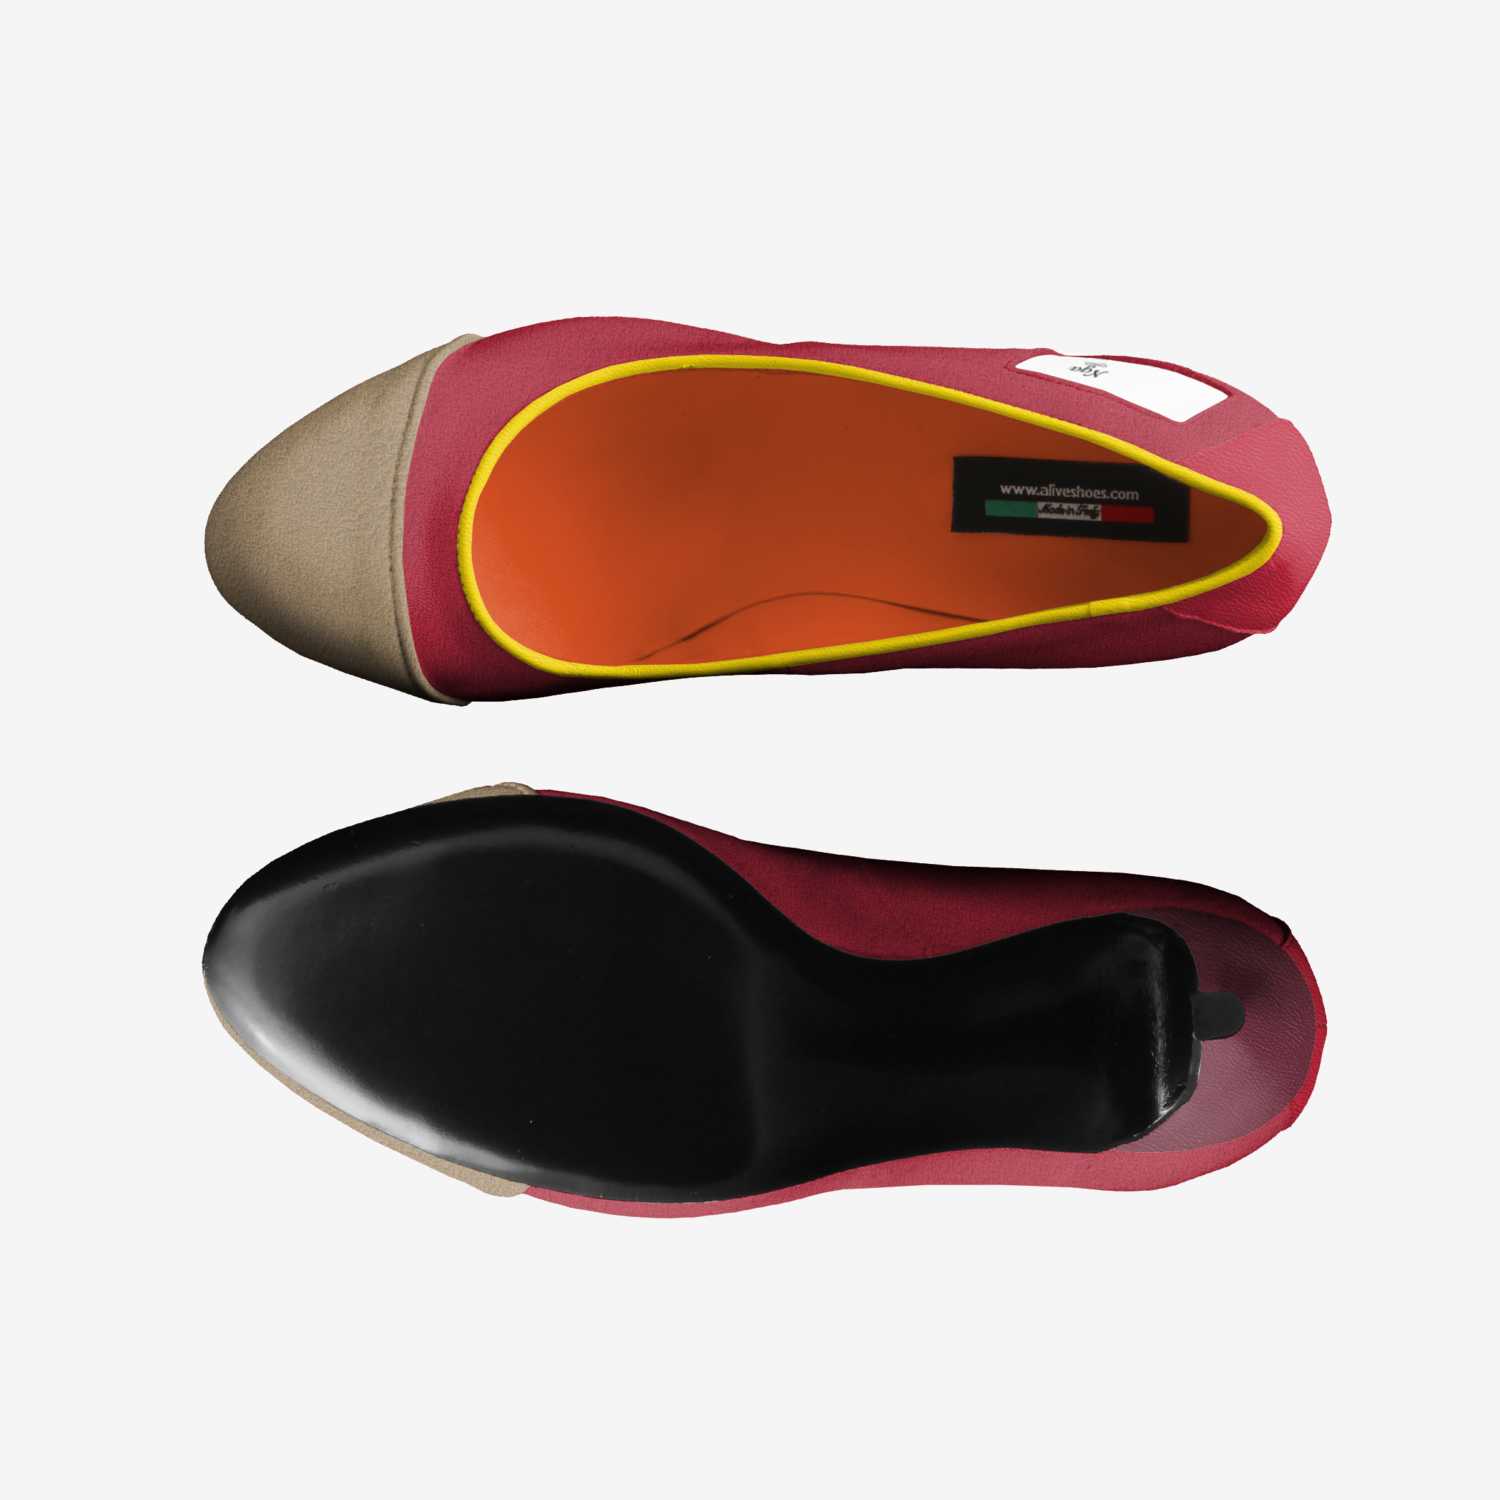 Nga | A Custom Shoe concept by Thu Tran